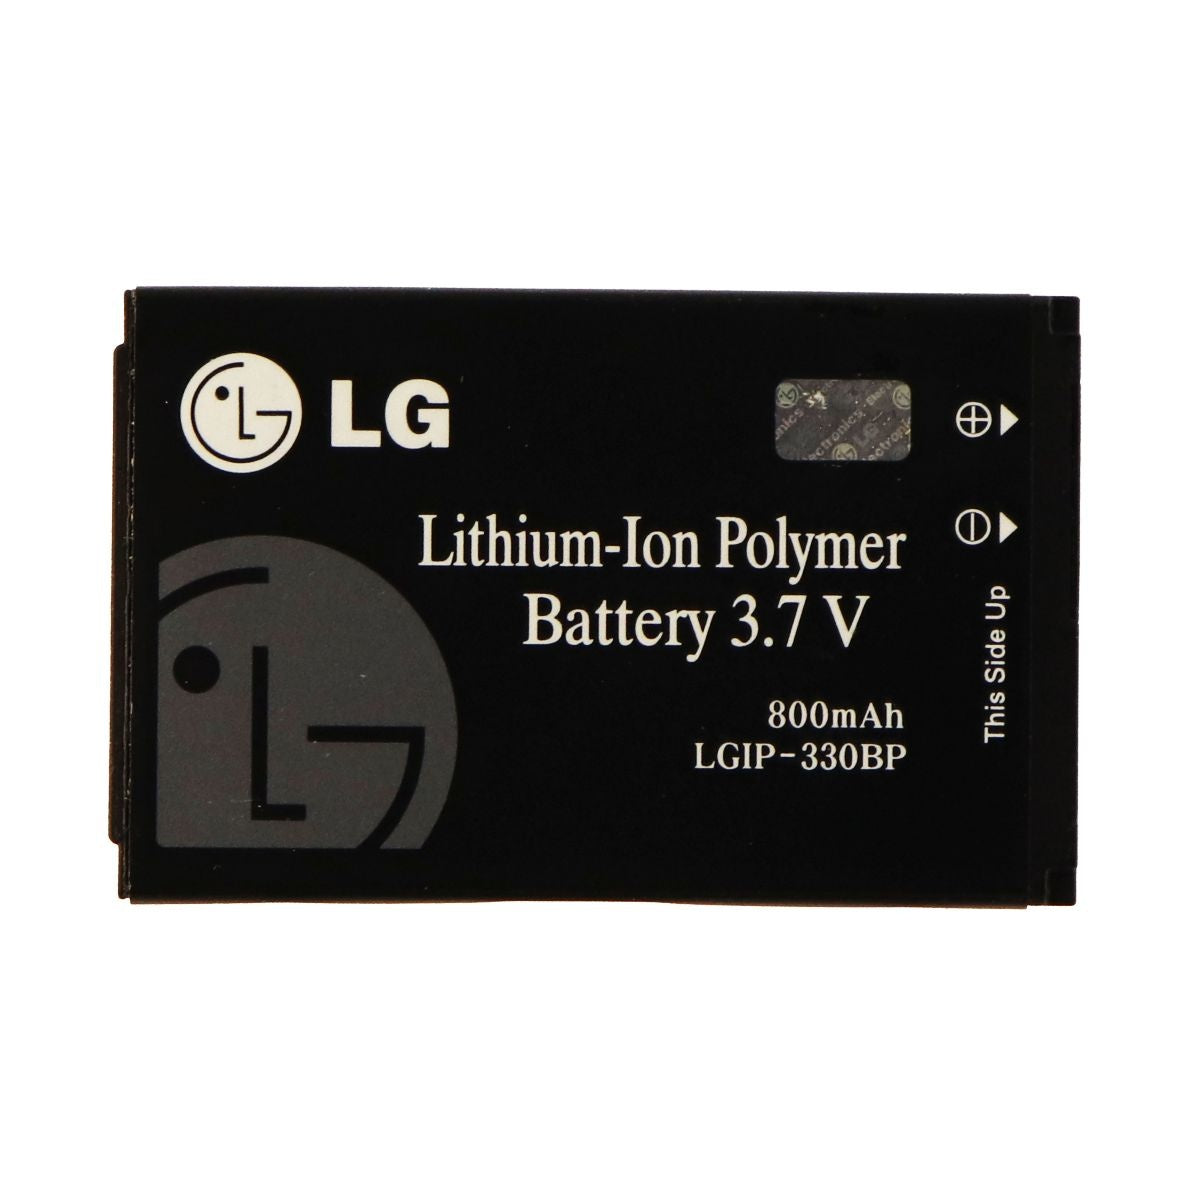 LG Lithium Ion LGIP-330BP Battery for LG Venus - Black 800mAh Cell Phone - Batteries LG    - Simple Cell Bulk Wholesale Pricing - USA Seller